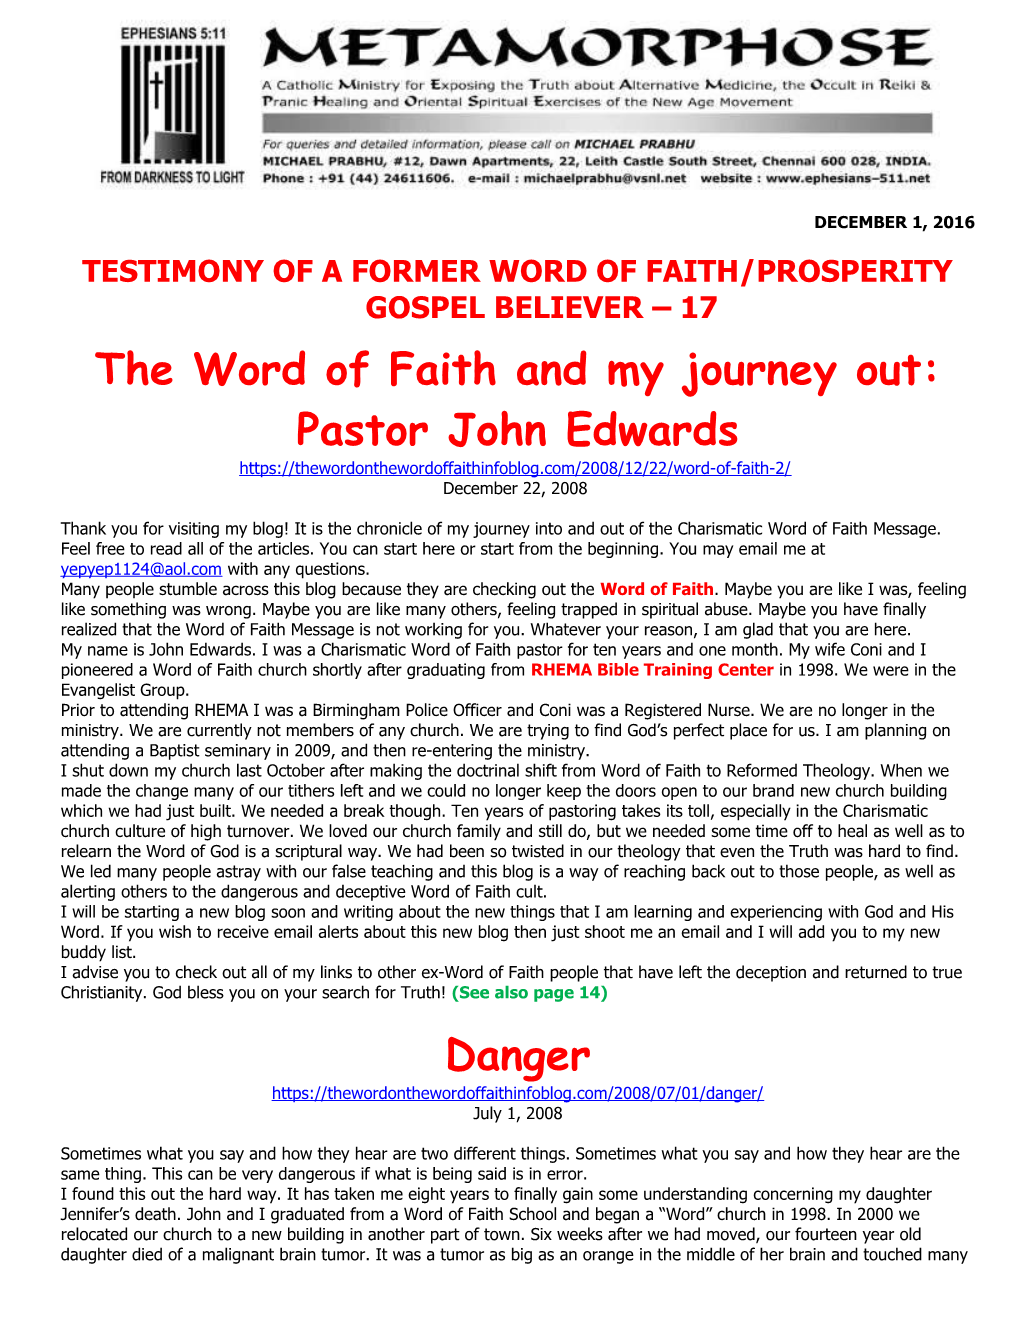 Testimony of a Former Word of Faith/Prosperity Gospel Believer 17